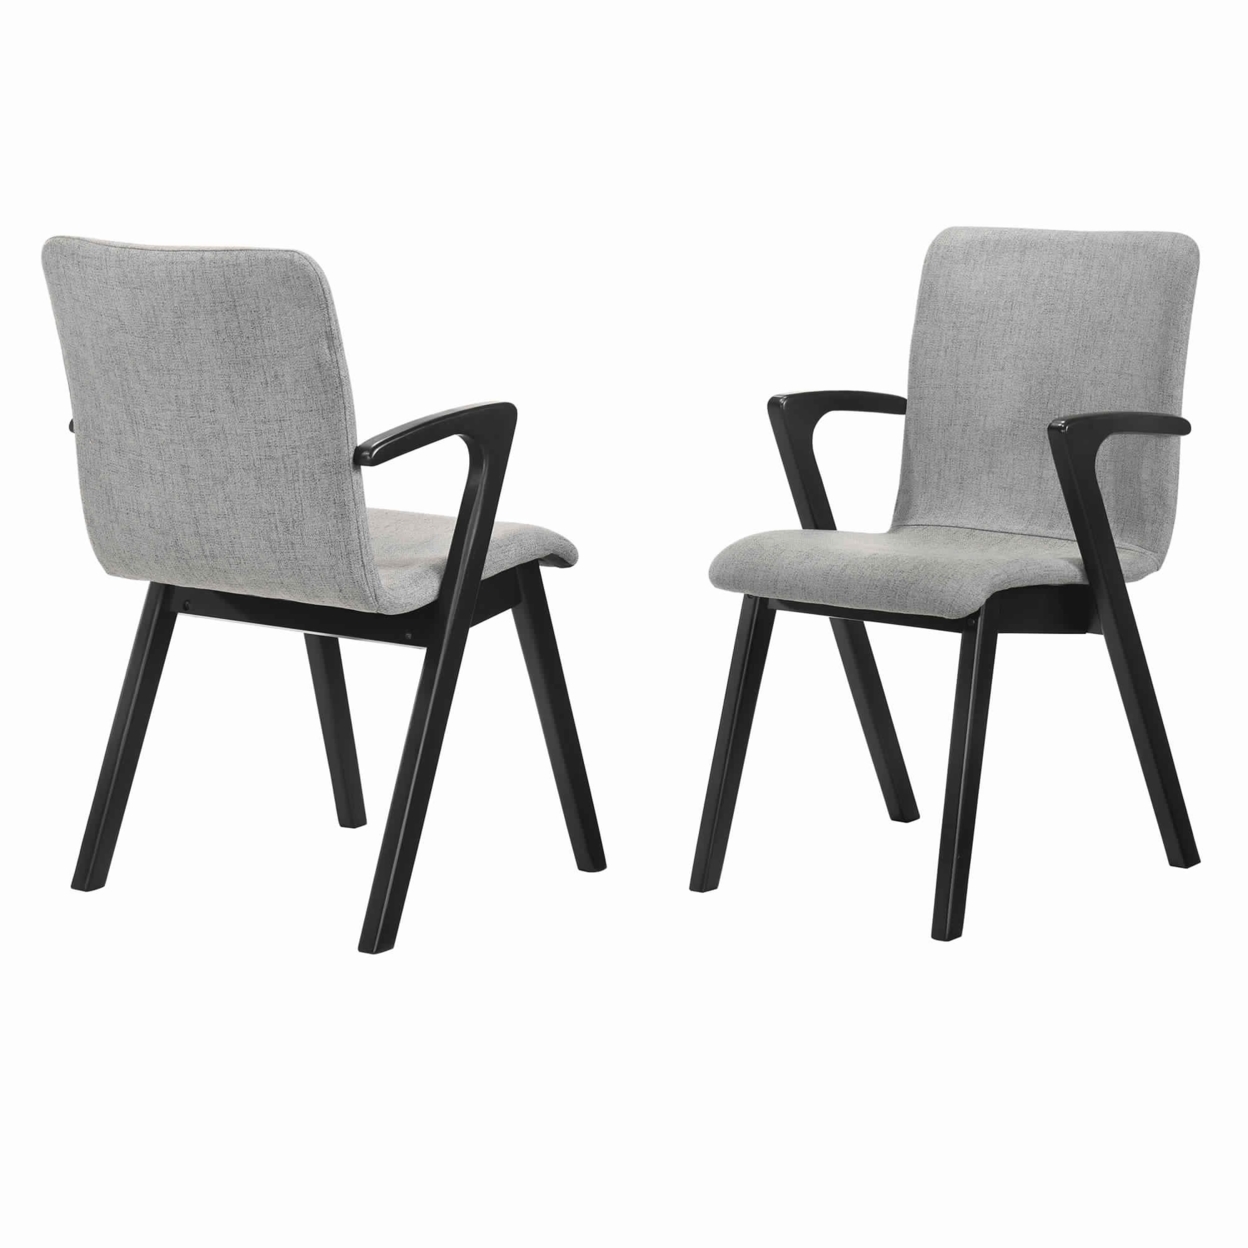 Mid Century Modern Fabric Upholstered Dining Chair, Set Of 2,Black And Gray- Saltoro Sherpi